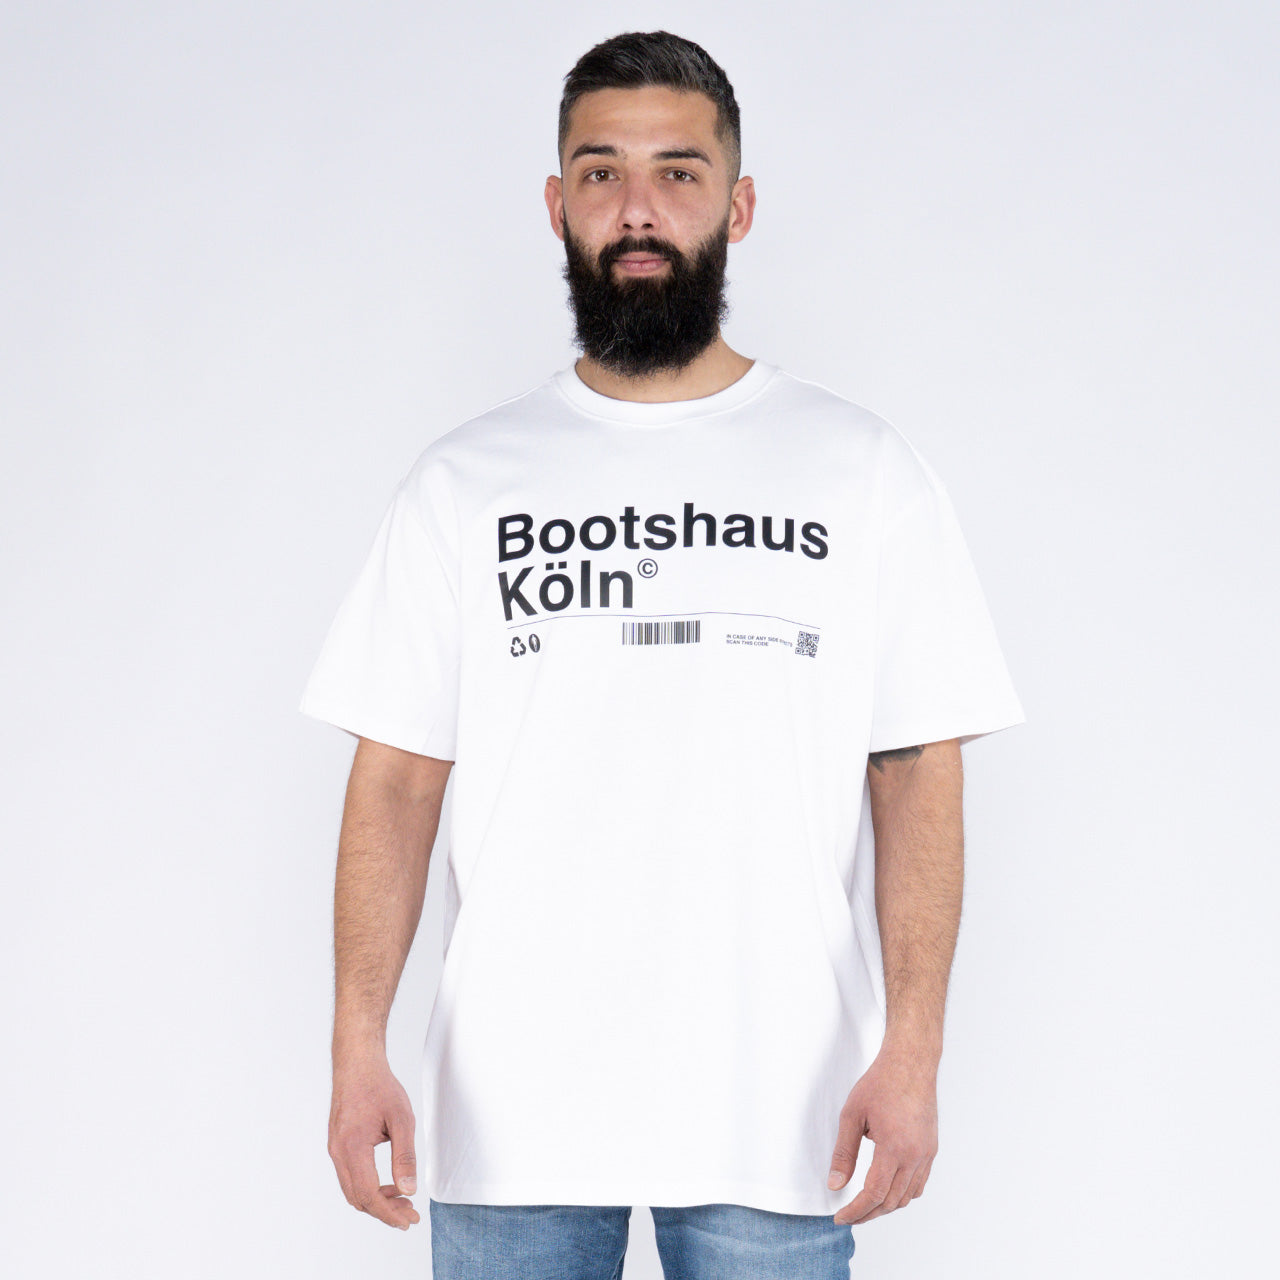 Bootshaus - Unbox Shirt weiss